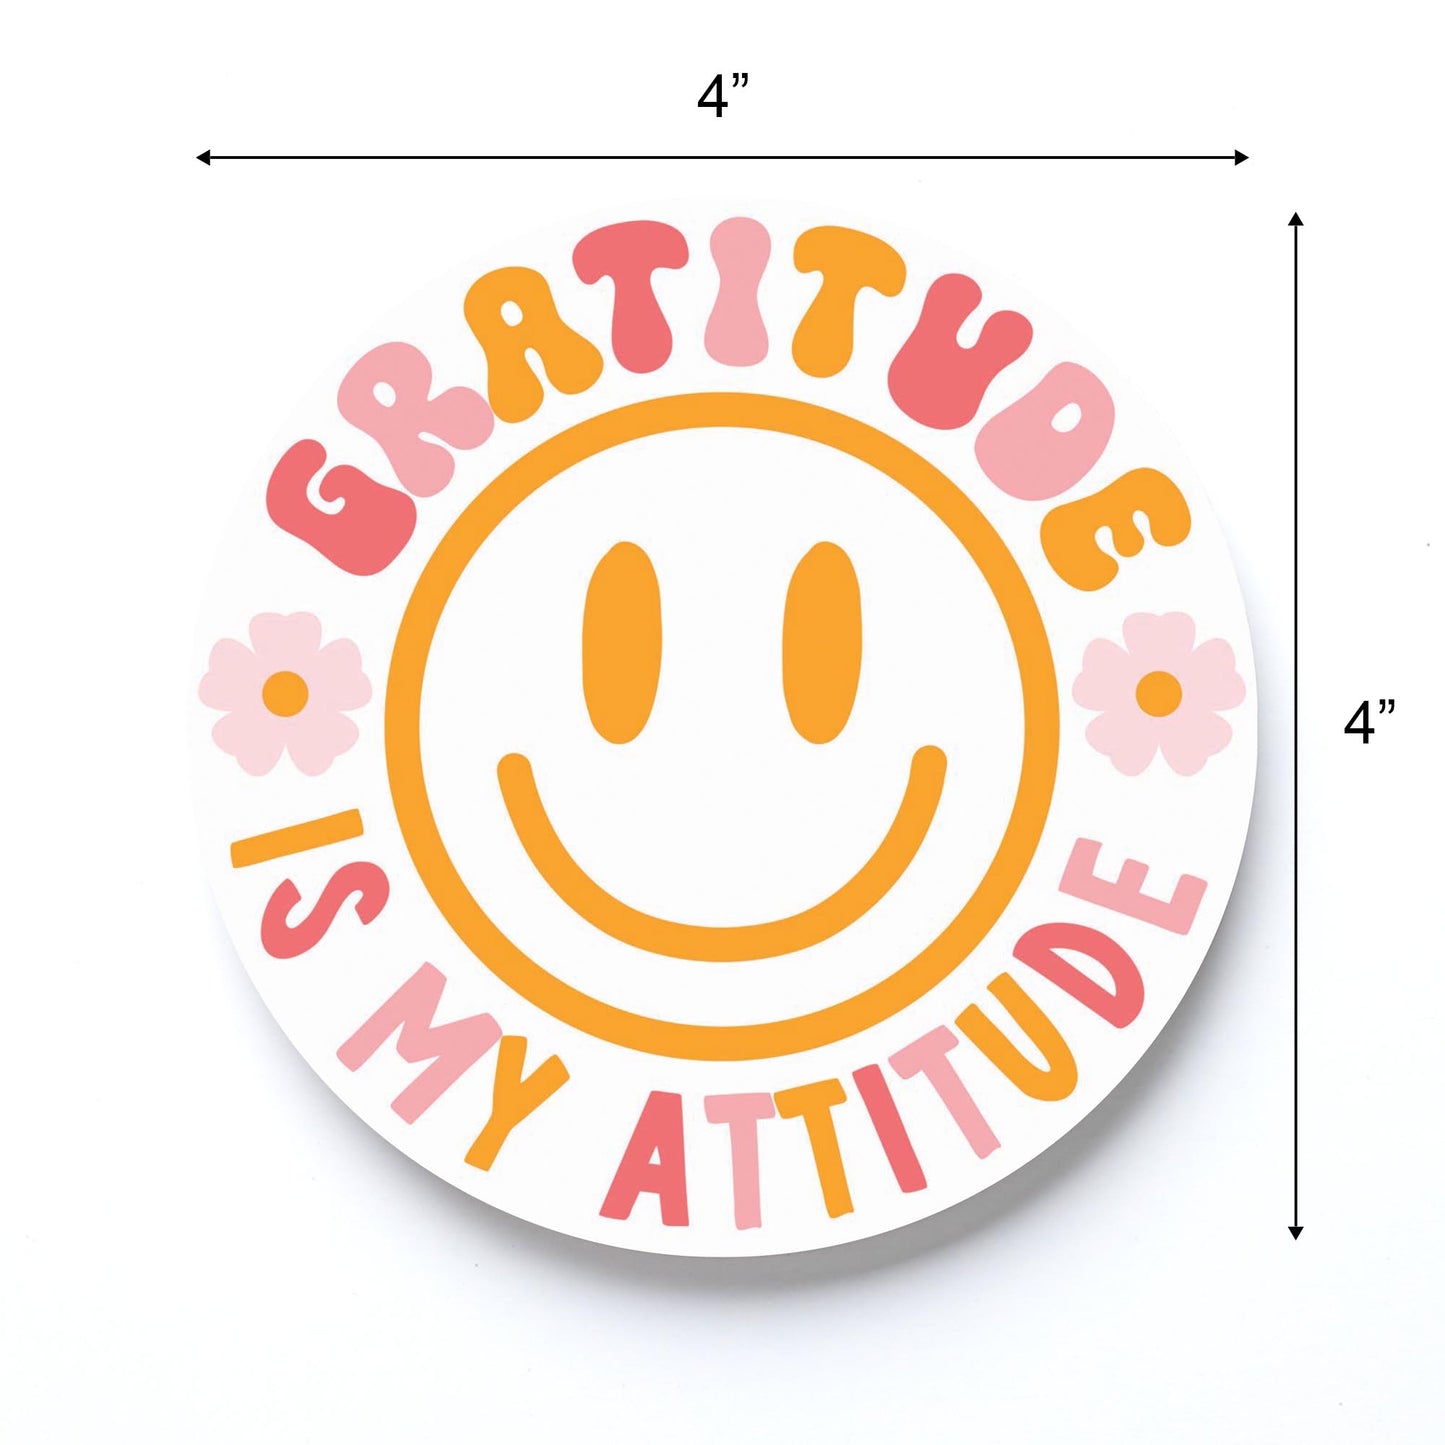 Happy Plans Gratitude Is My Attitude